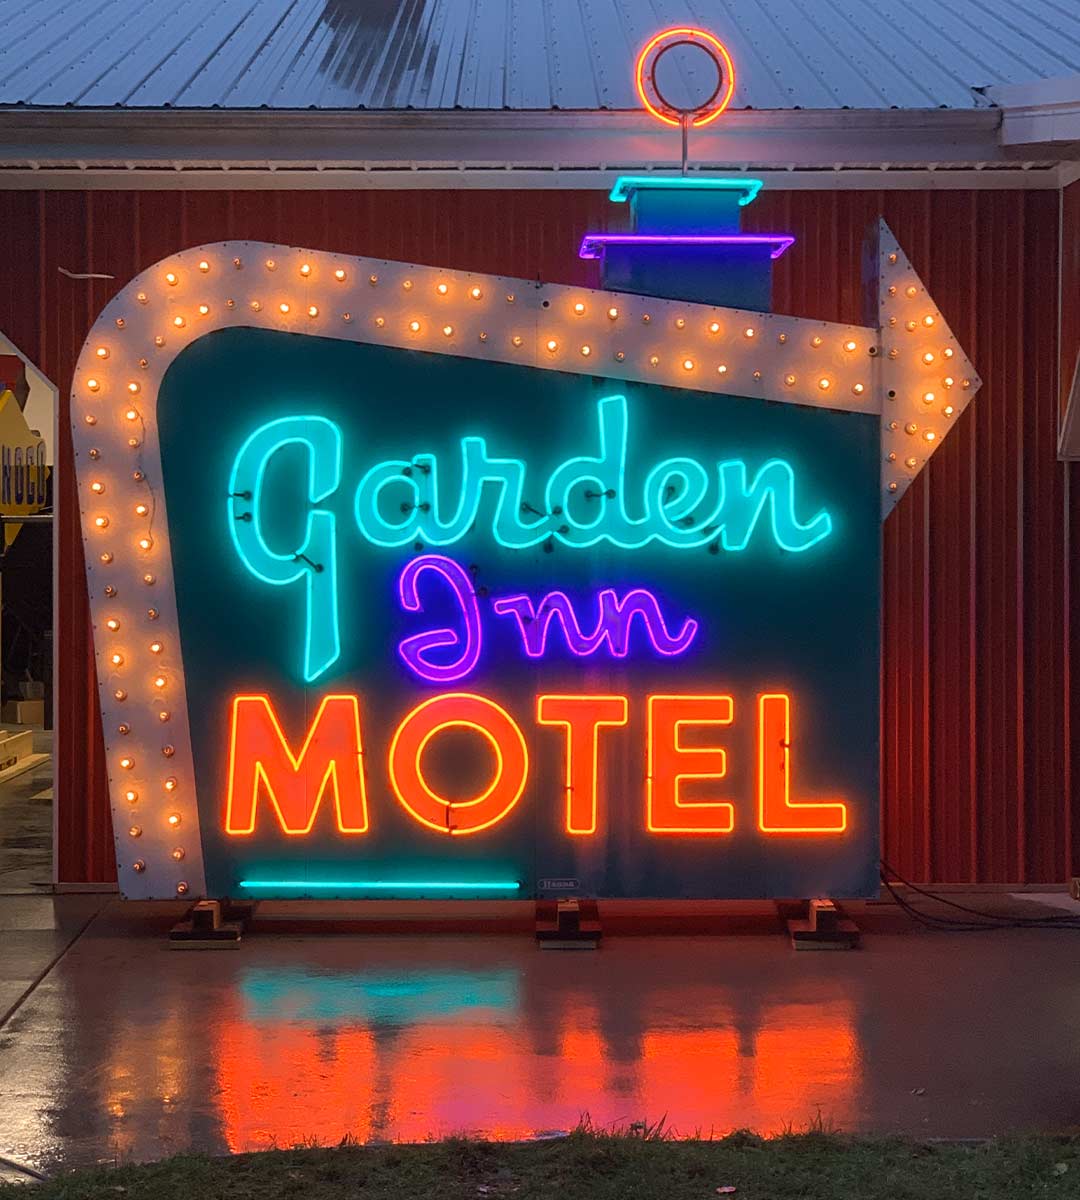 Garden Inn Motel Neon